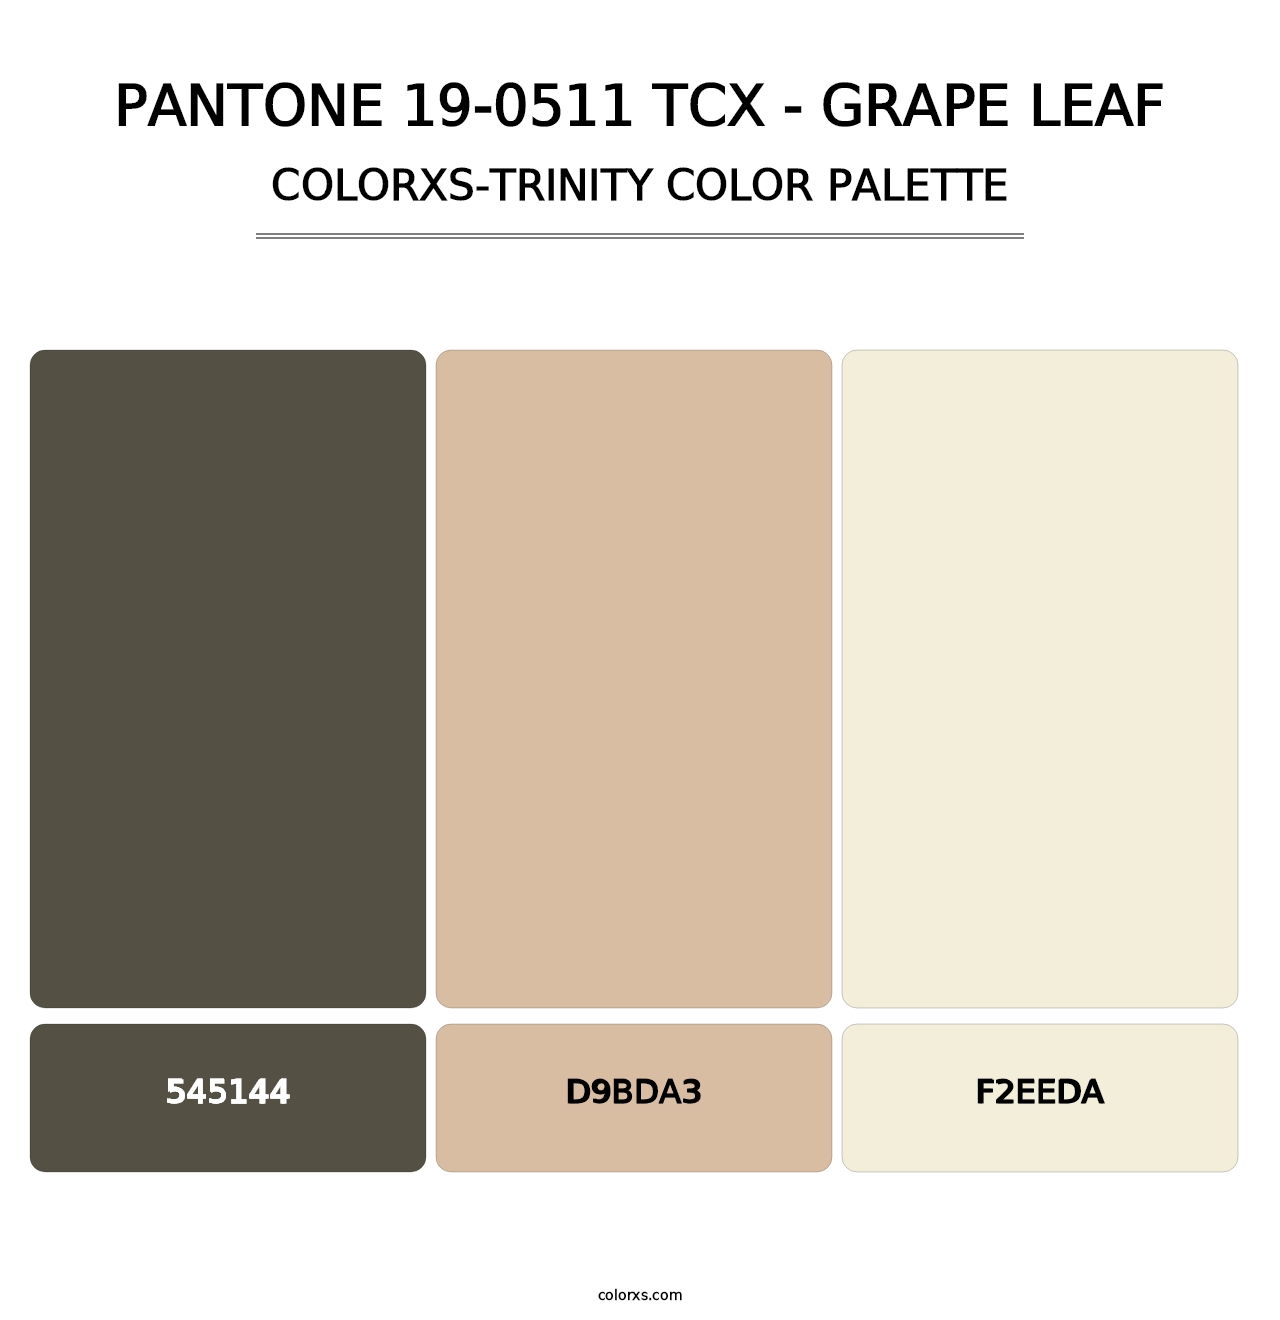 PANTONE 19-0511 TCX - Grape Leaf - Colorxs Trinity Palette